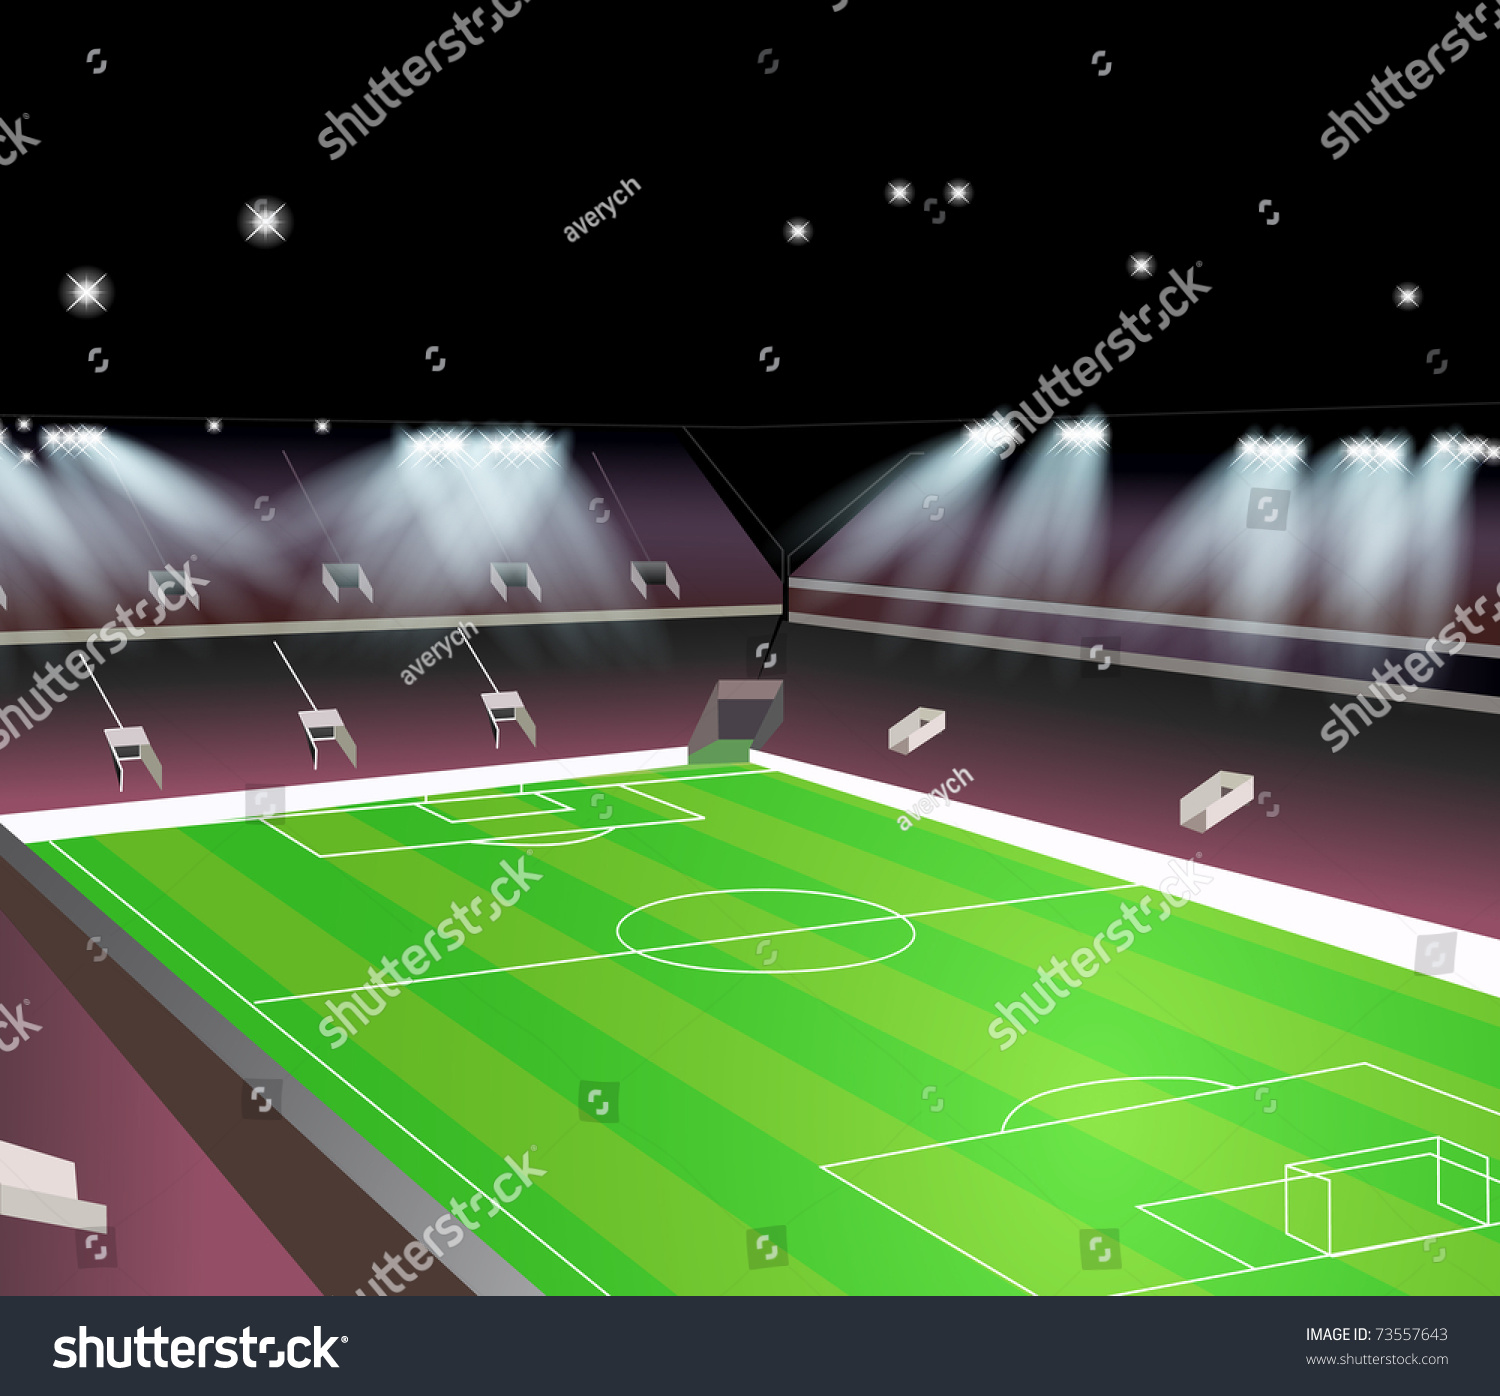 Football Stadium Stock Vector Illustration 73557643 : Shutterstock